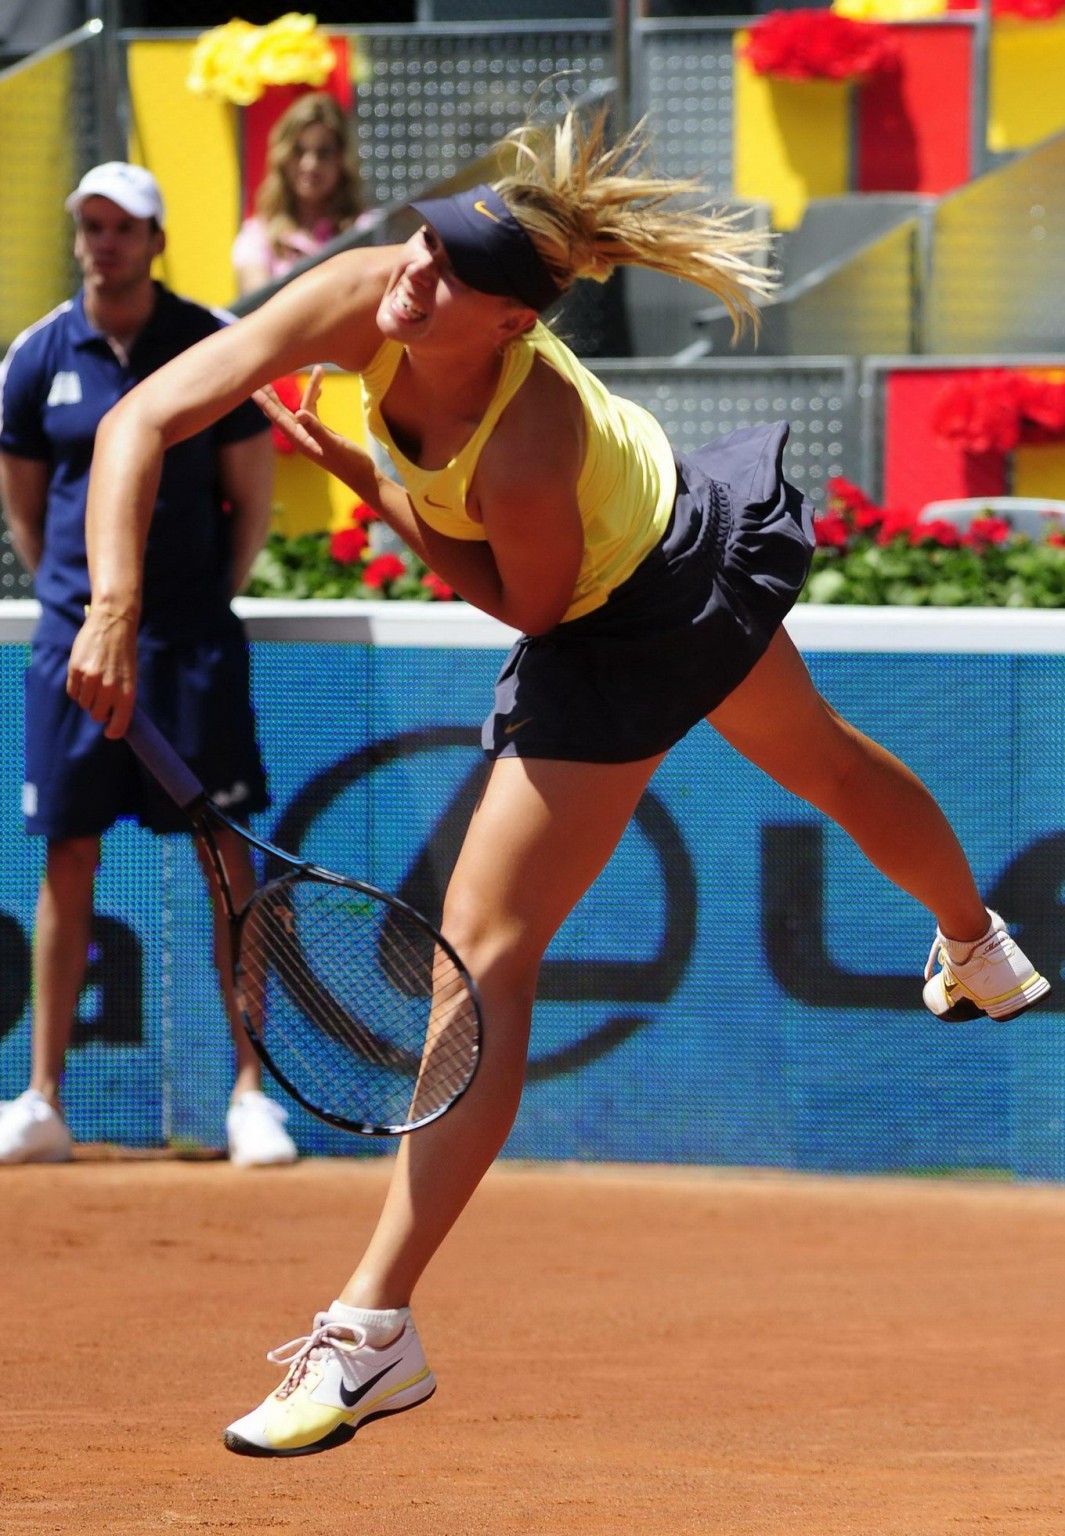 Maria Sharapova en jupe haute au tournoi des 'masters' de Madrid
 #75305216